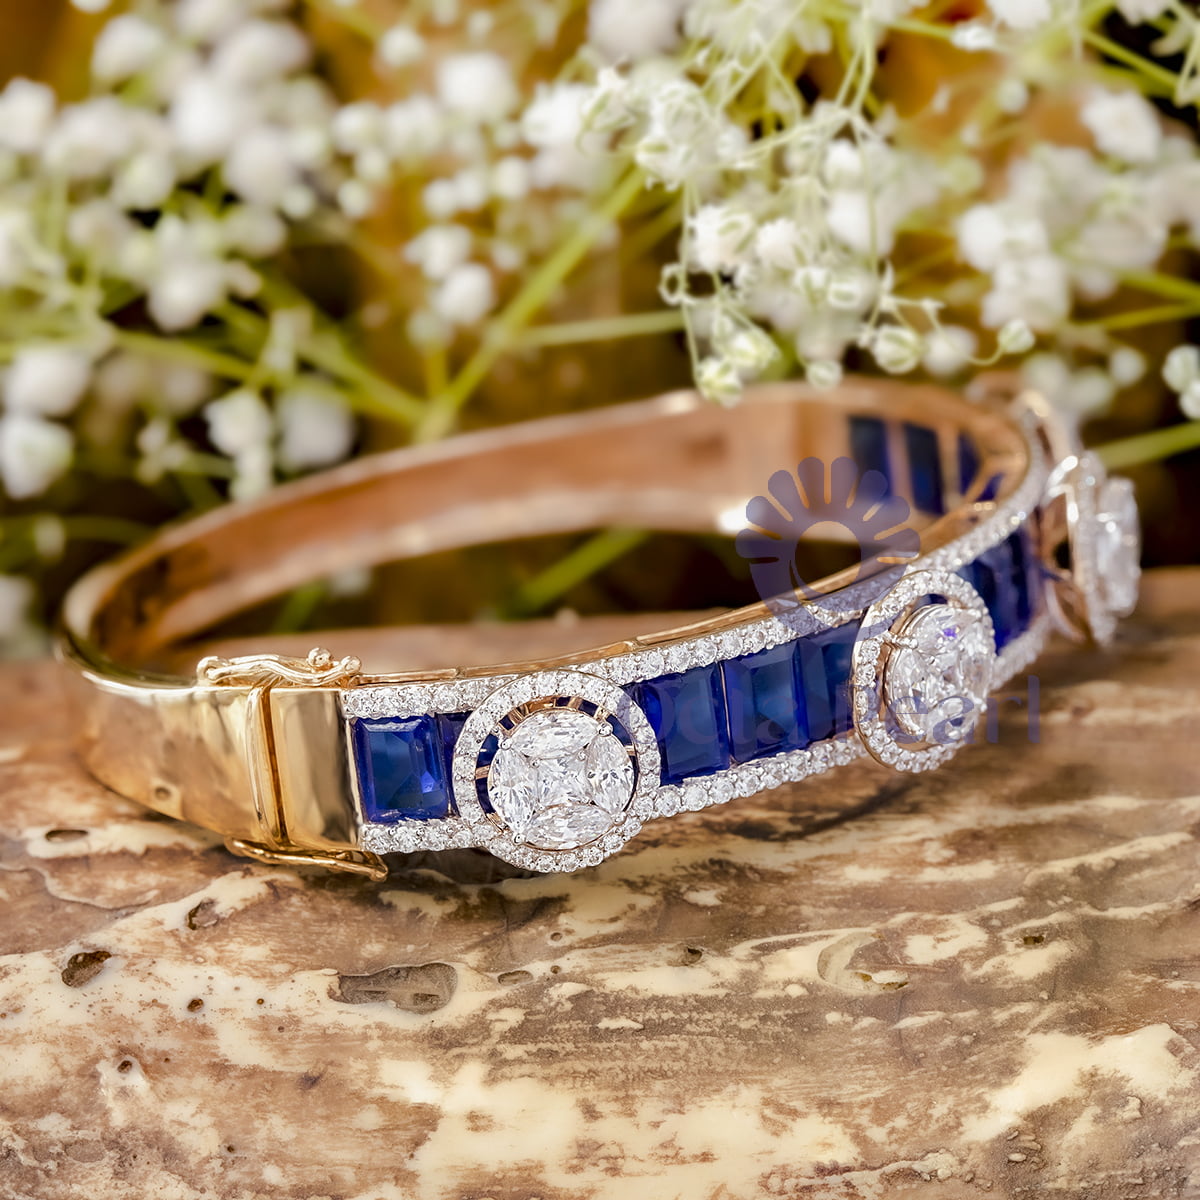 Blue Sapphire Emerald With Multi Cut CZ Stone Studded Bangle Bracelet (17 7/9 TCW)